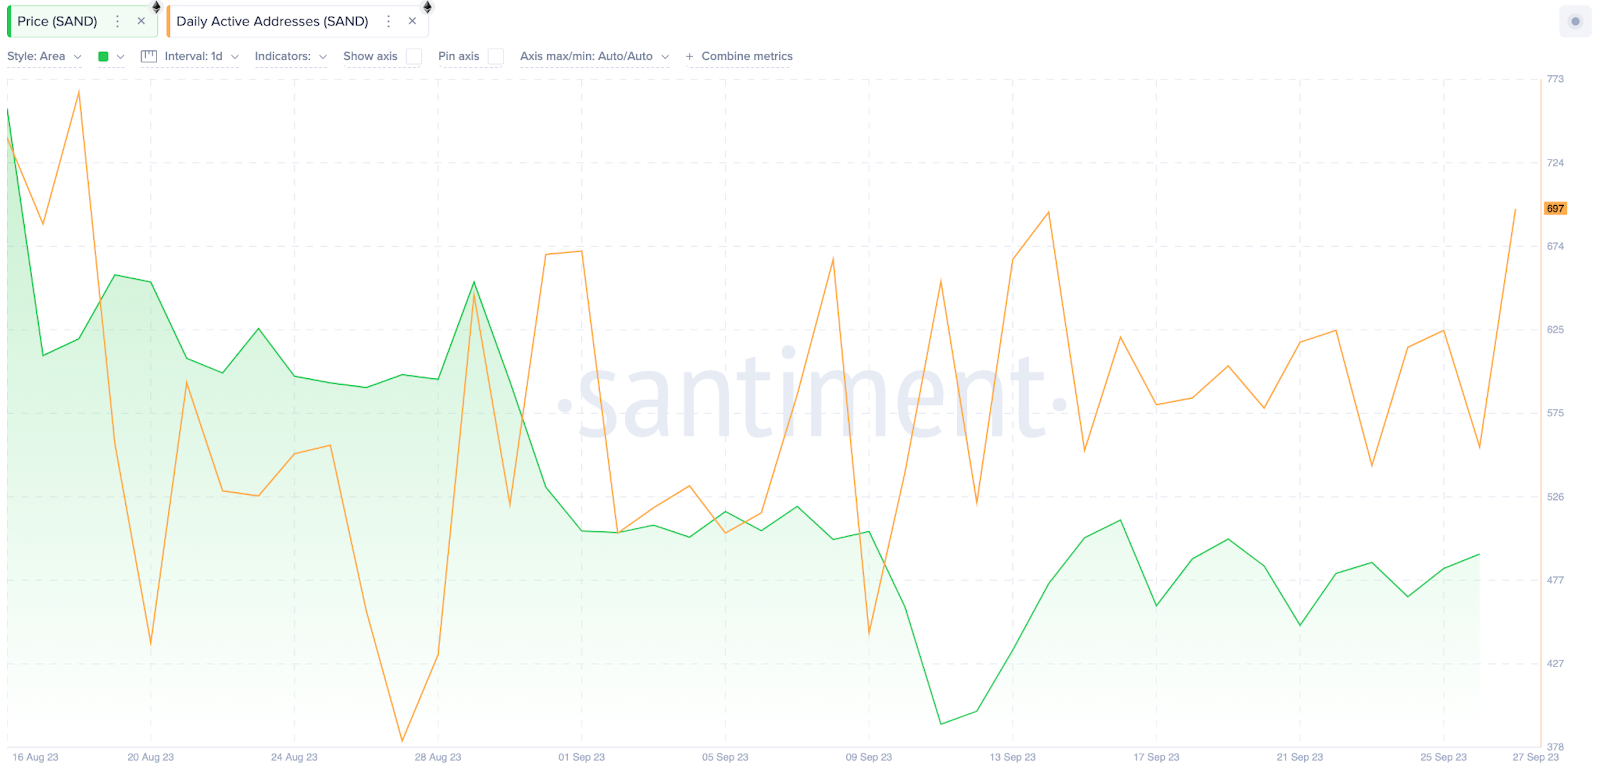 Sandbox (SAND) Daily Active Addresses vs. Price 